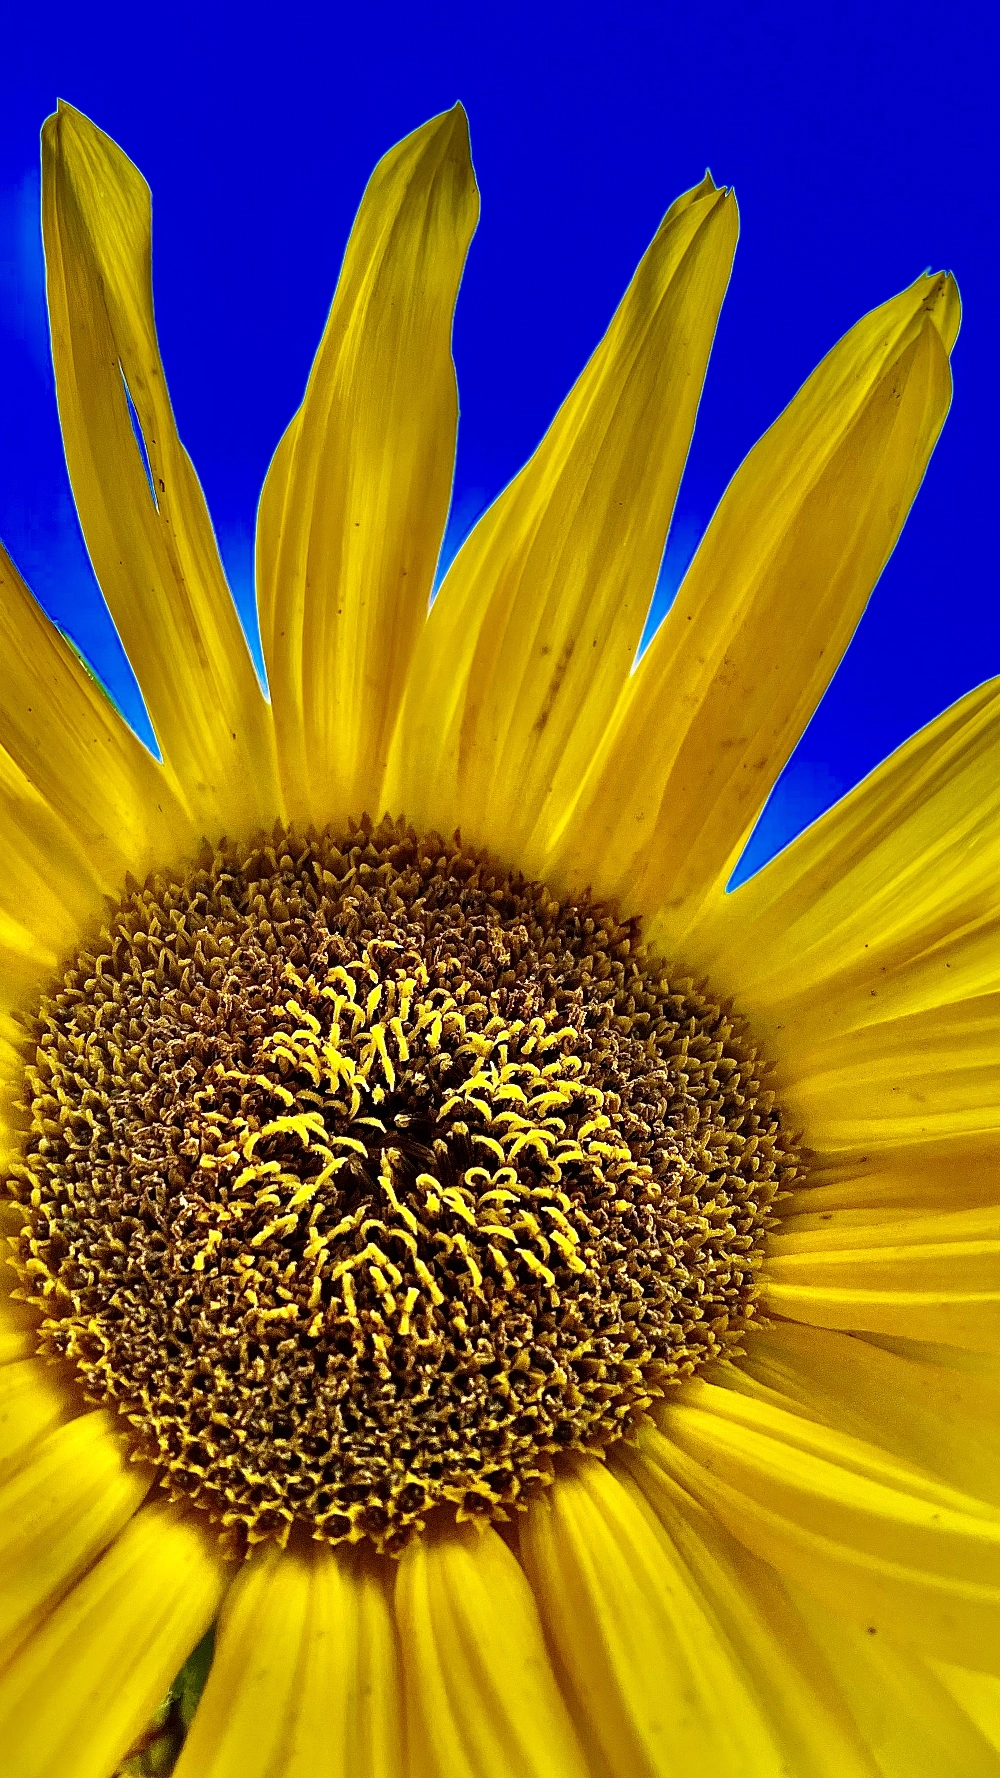 #sunflower #sunflowersplash #sundflowerbaby #bluesky